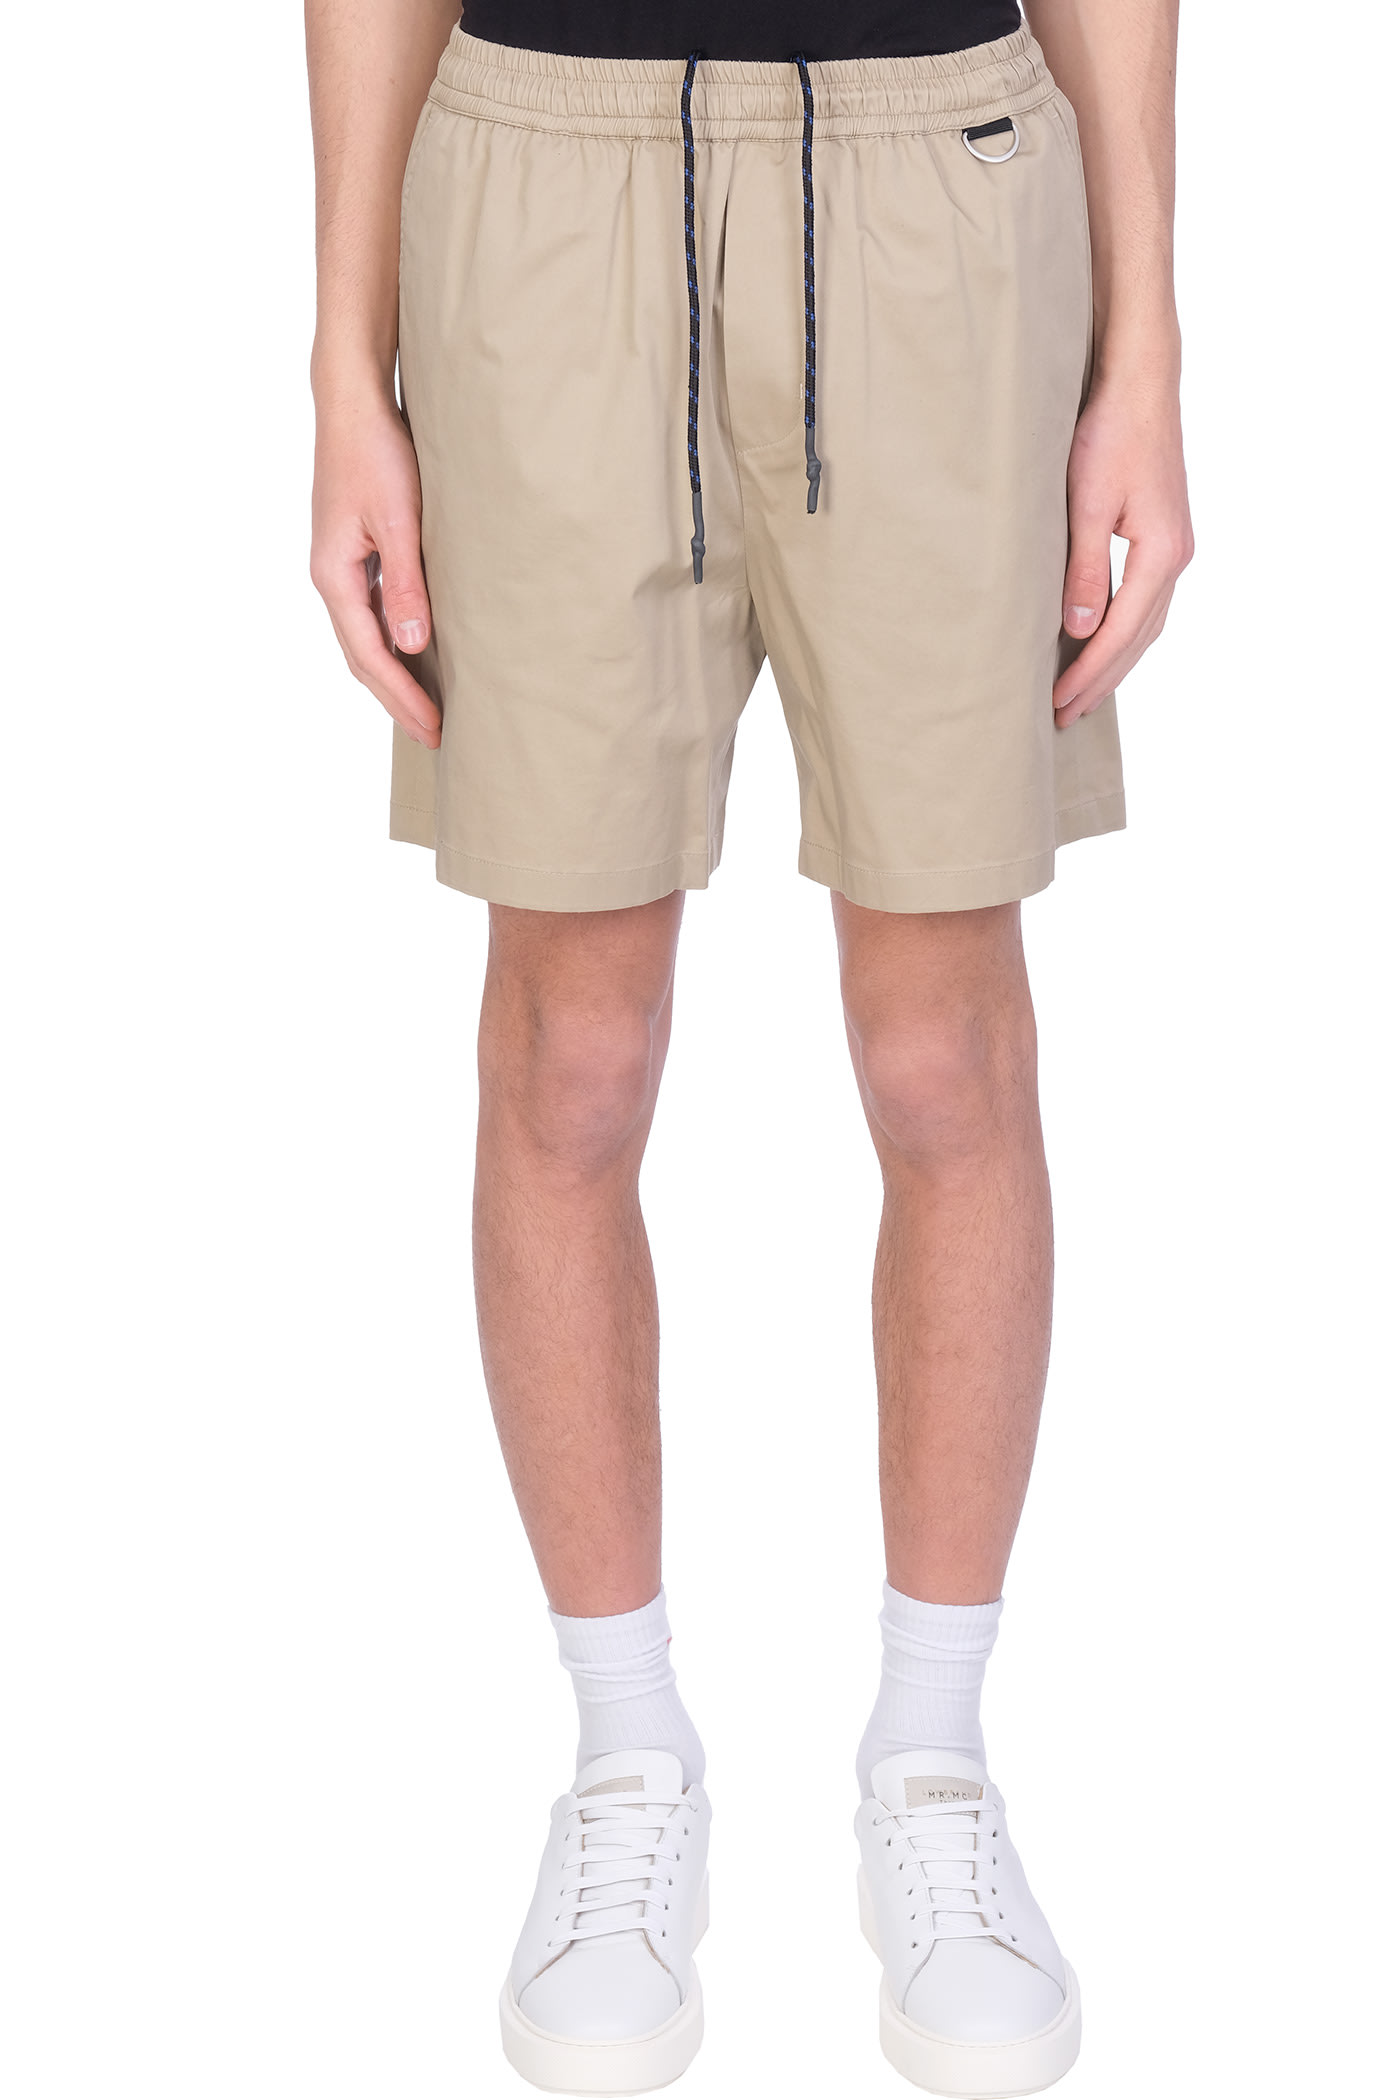 Low Brand Shorts In Beige Cotton